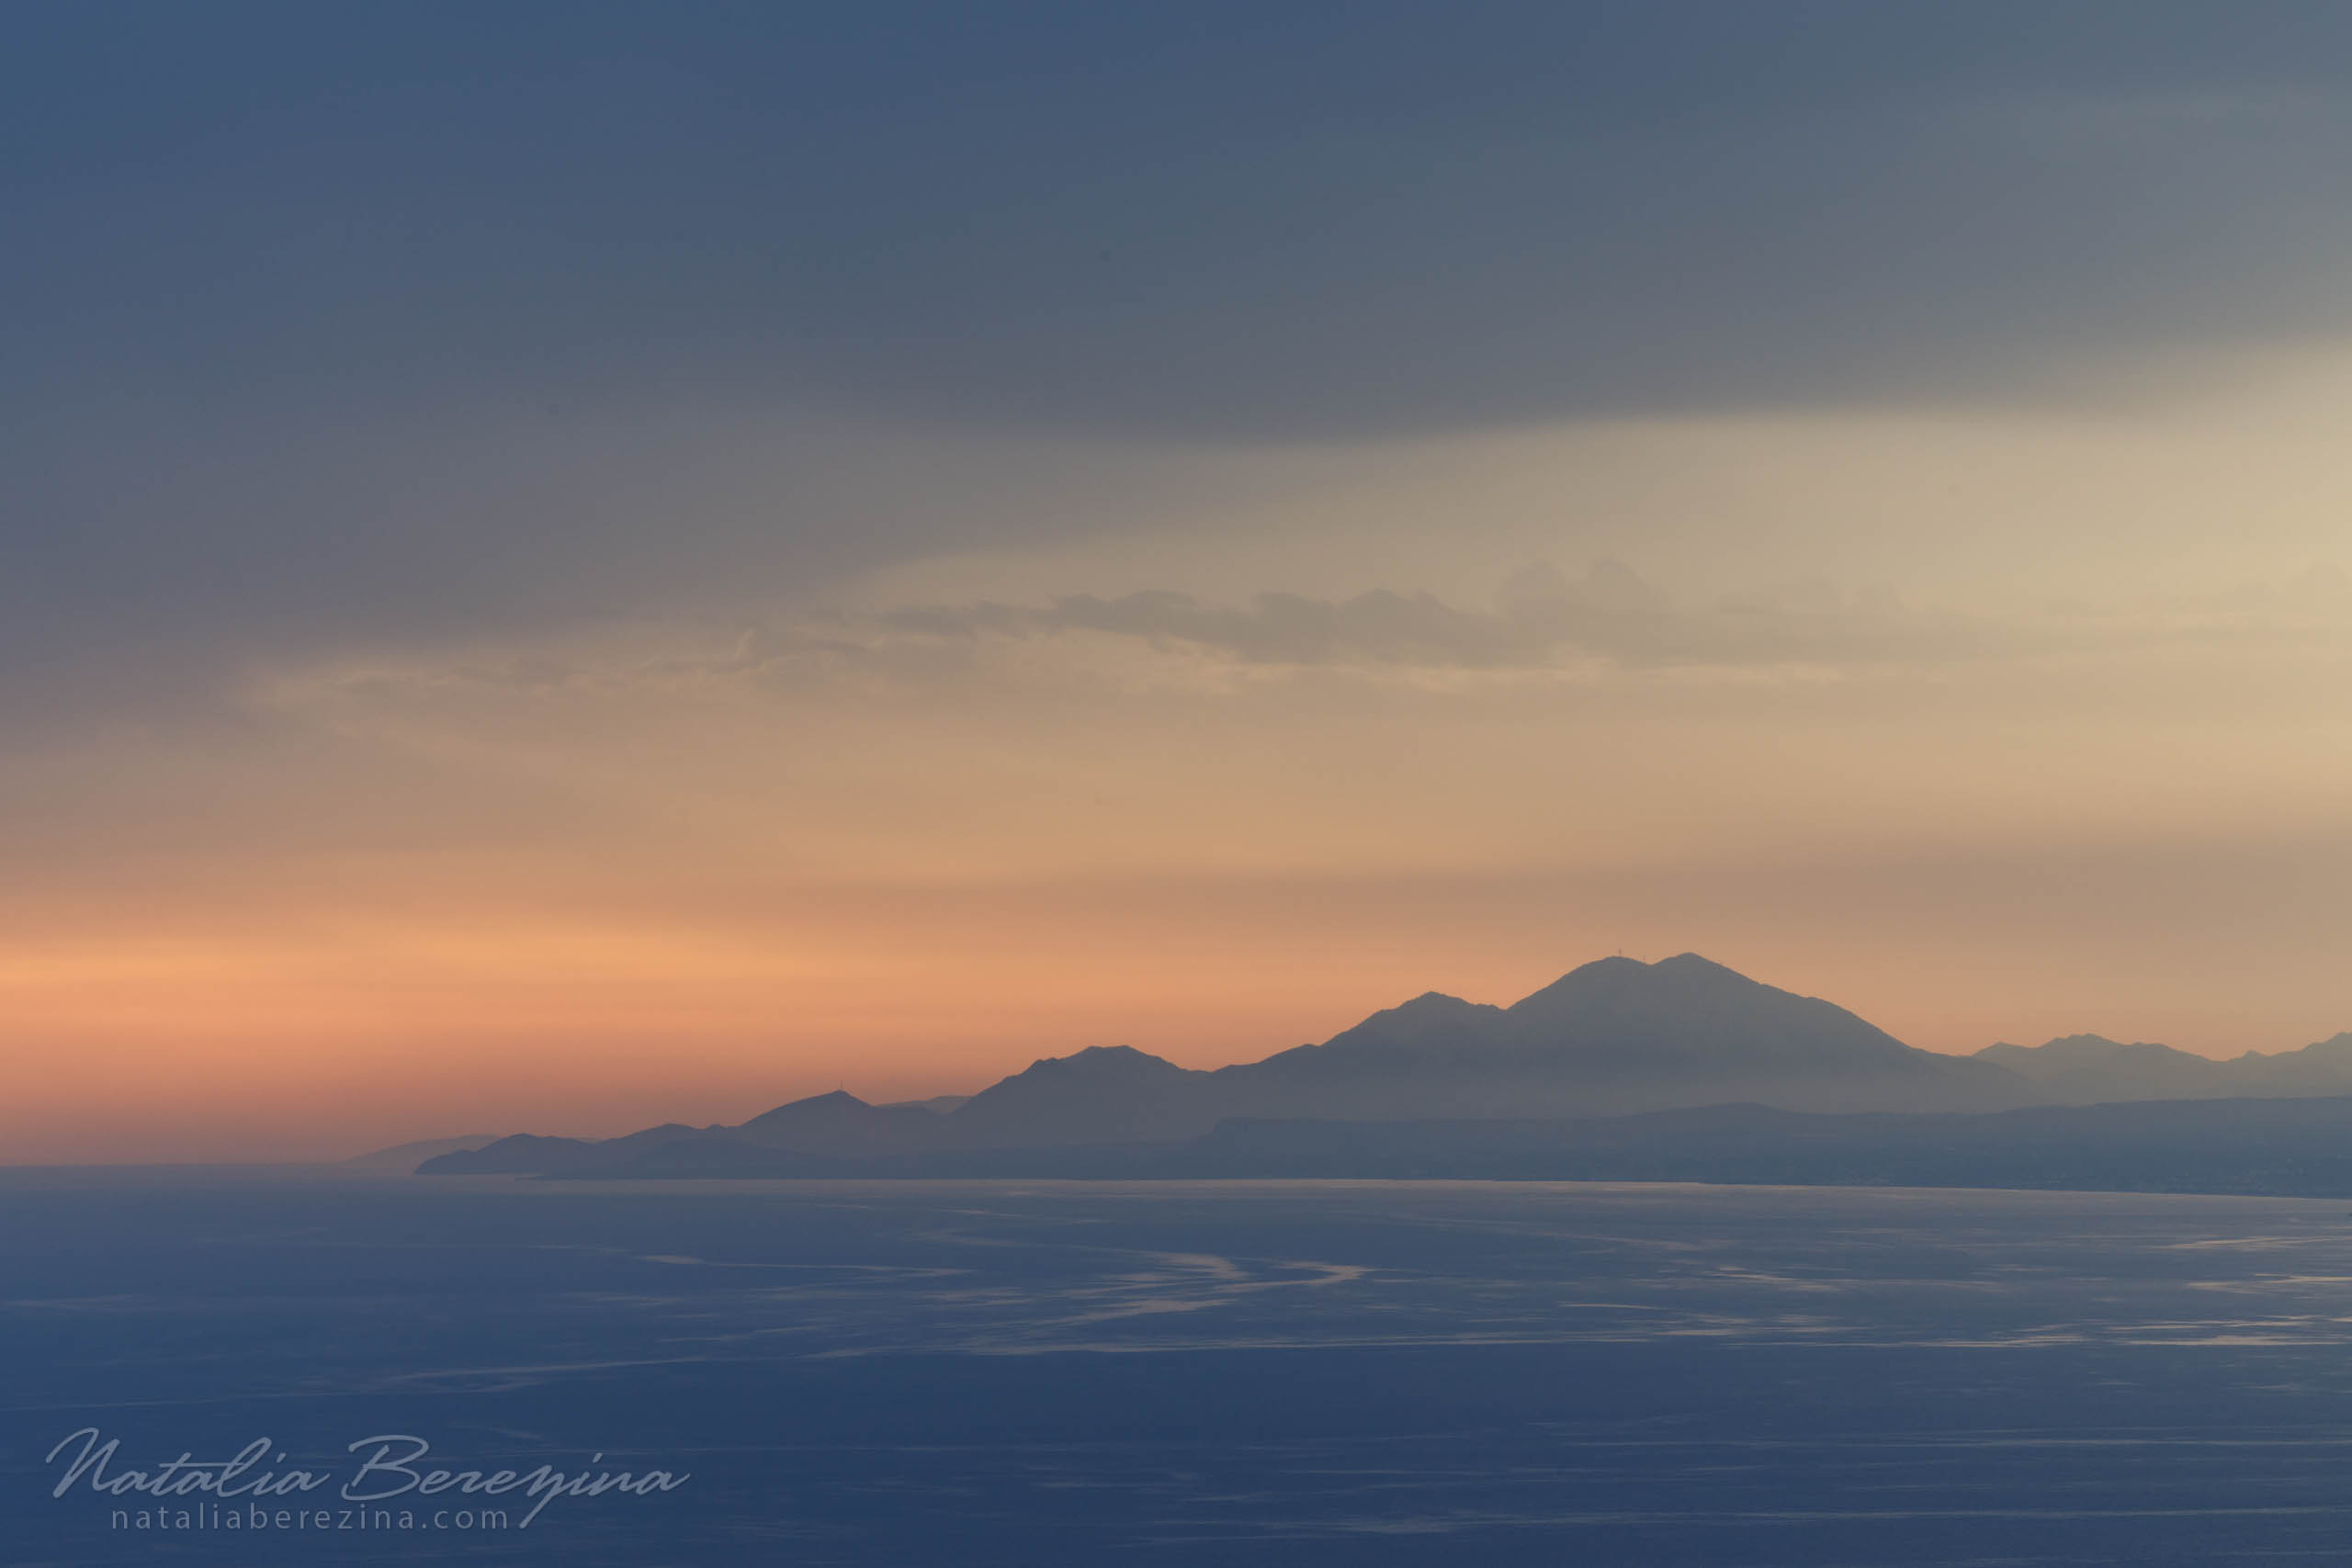 Greece, Crete, landscape, mountains, sunrise, skyline, cloud, orange CR1-NB7B6A8144 - Crete, Greece - Natalia Berezina Photography